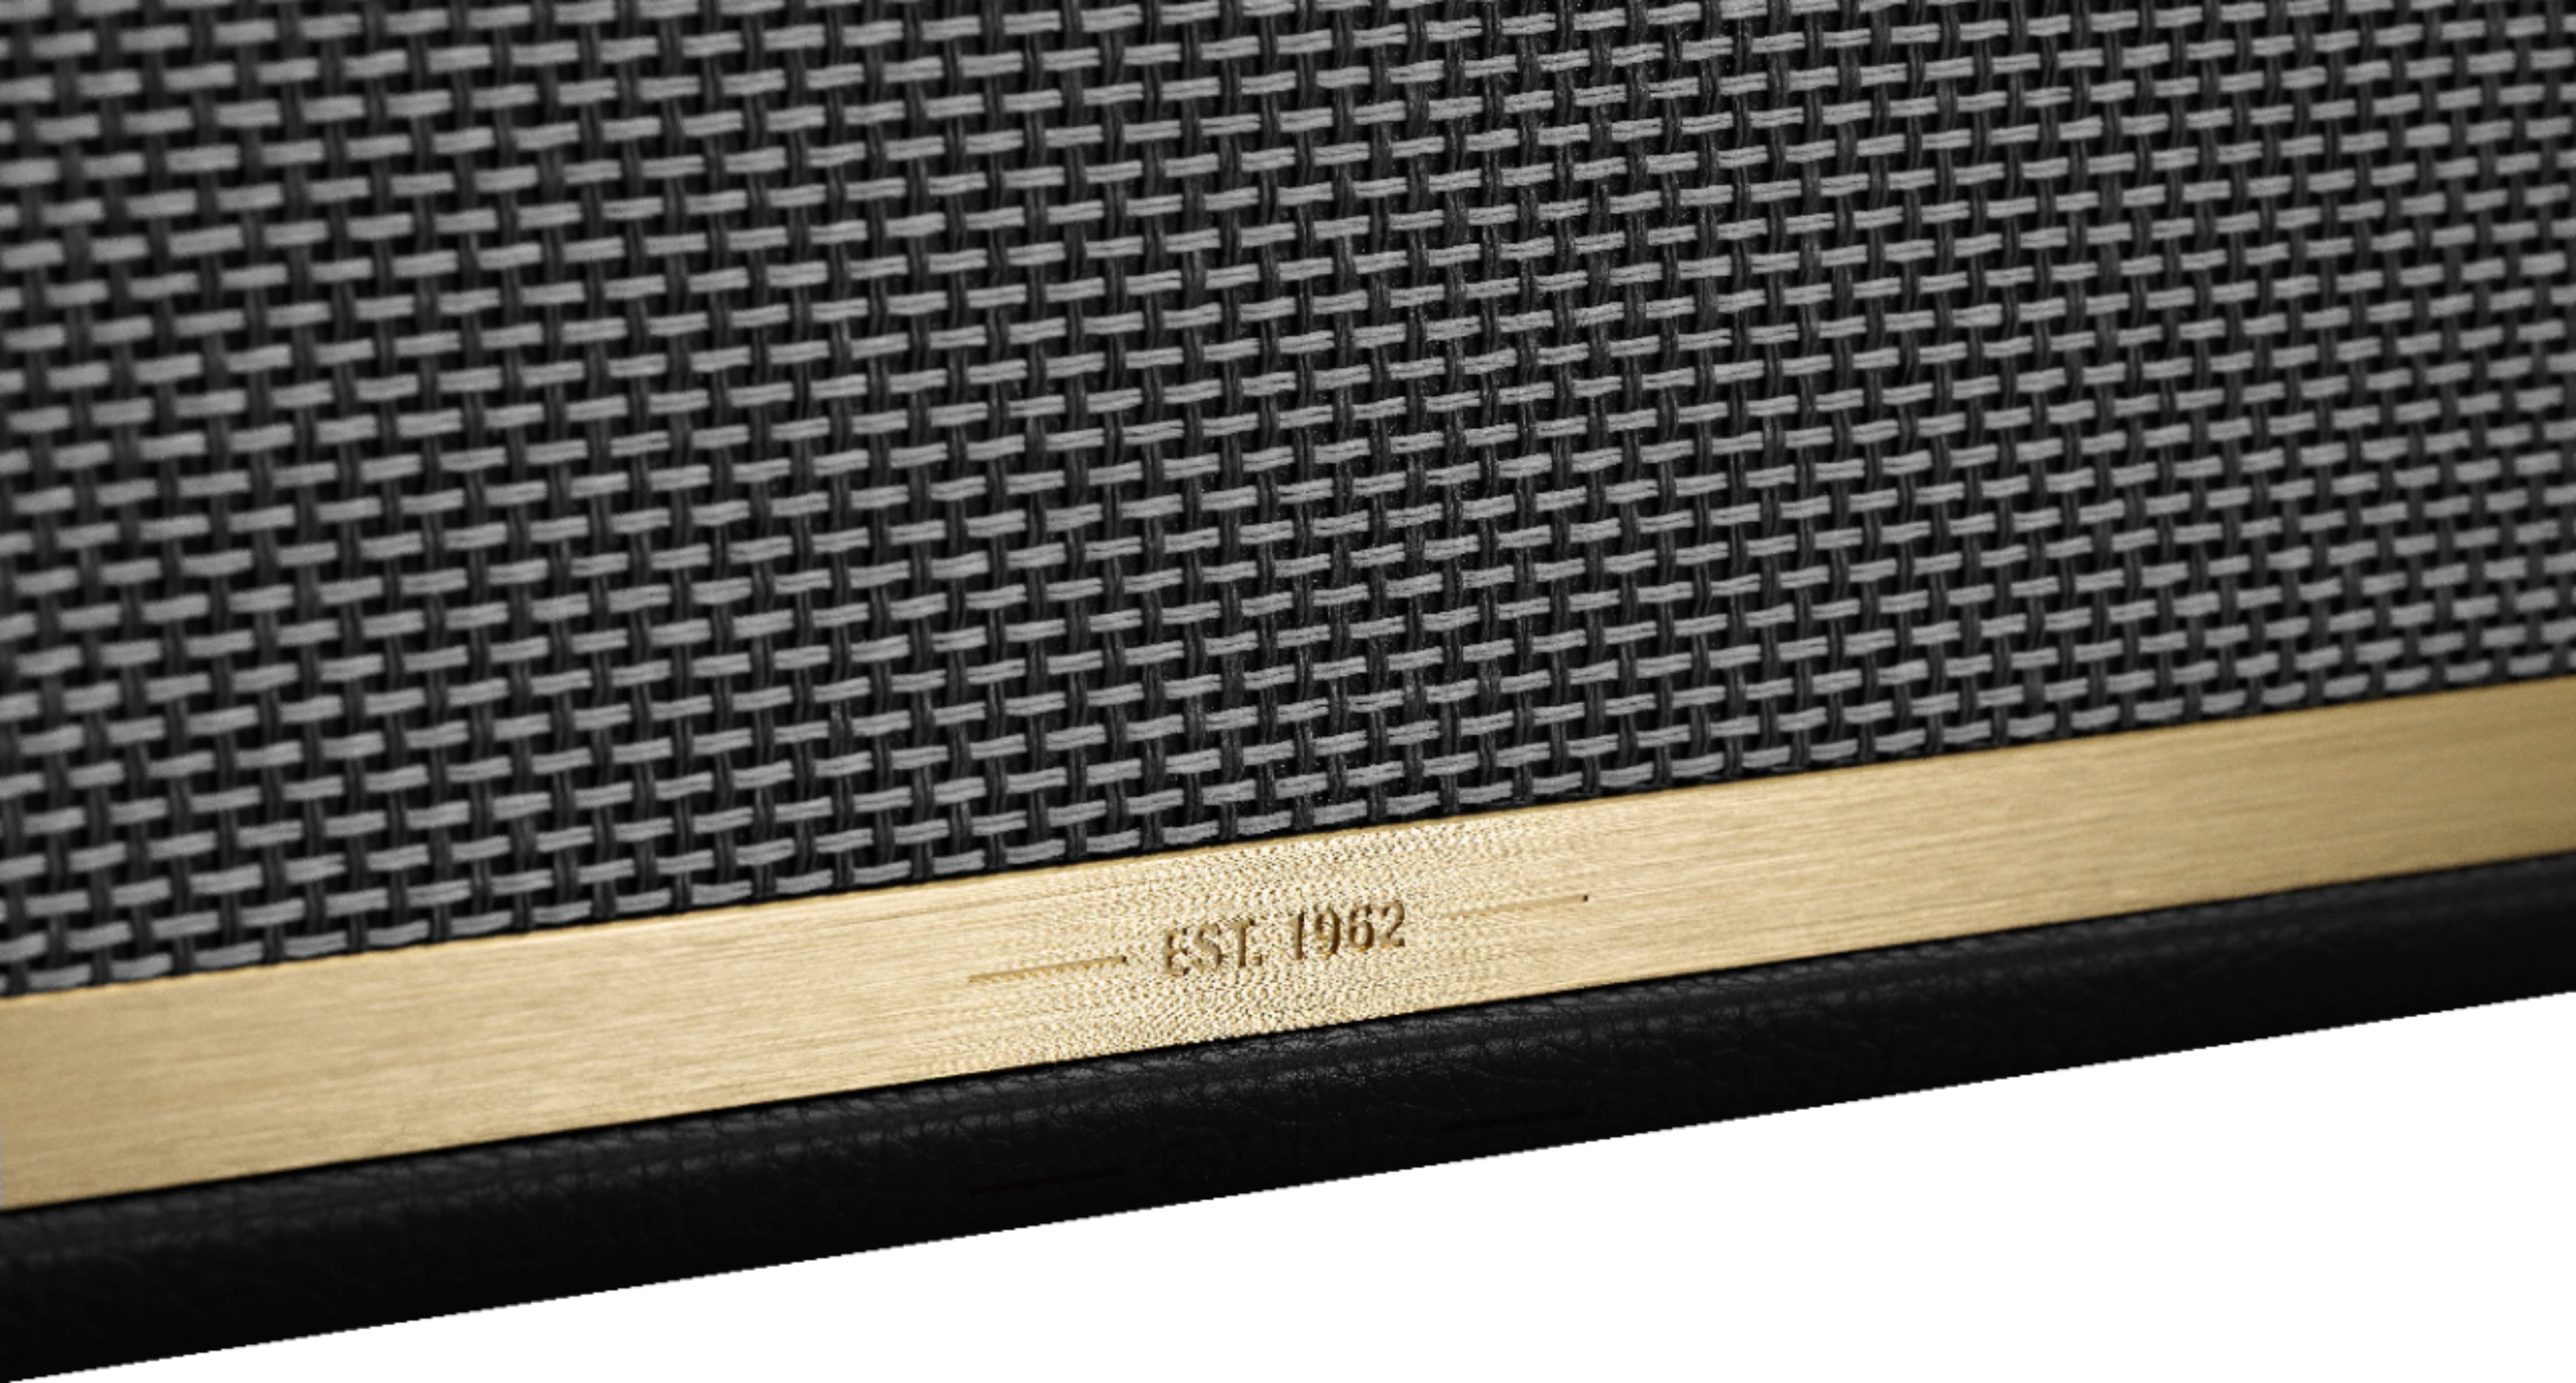 Marshall - Stanmore II - Brown - Bluetooth Speaker - Iconic Classic Premium  High Quality Speaker - Avvenice